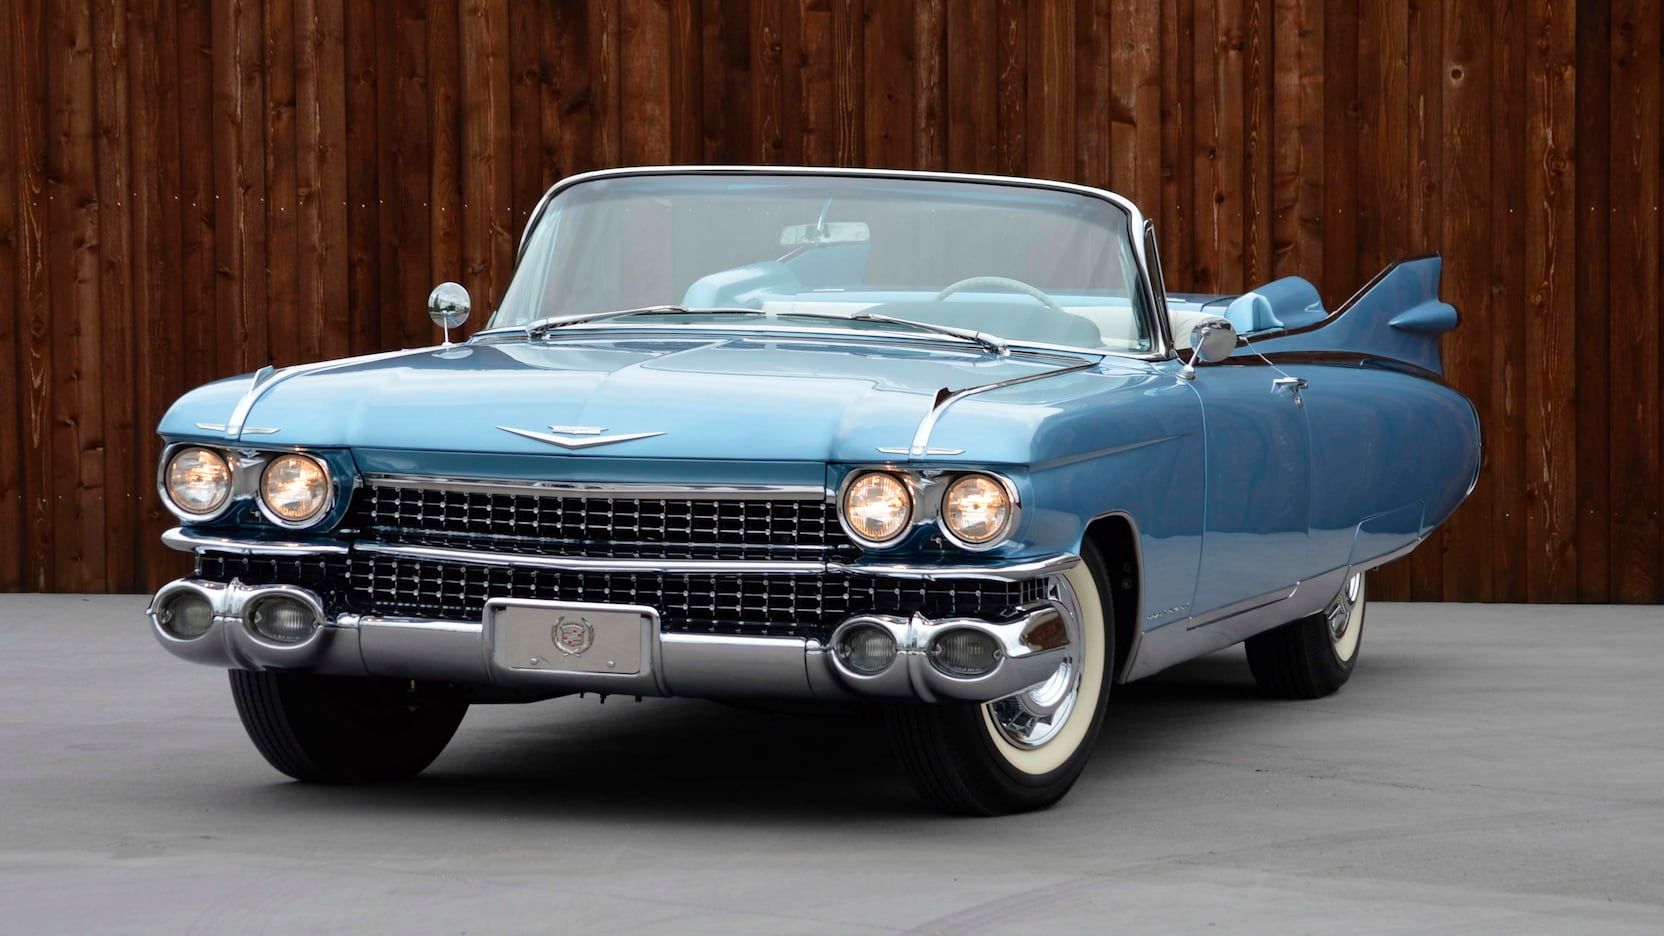 Blue 1959 Cadillac Eldorado Biarritz parked